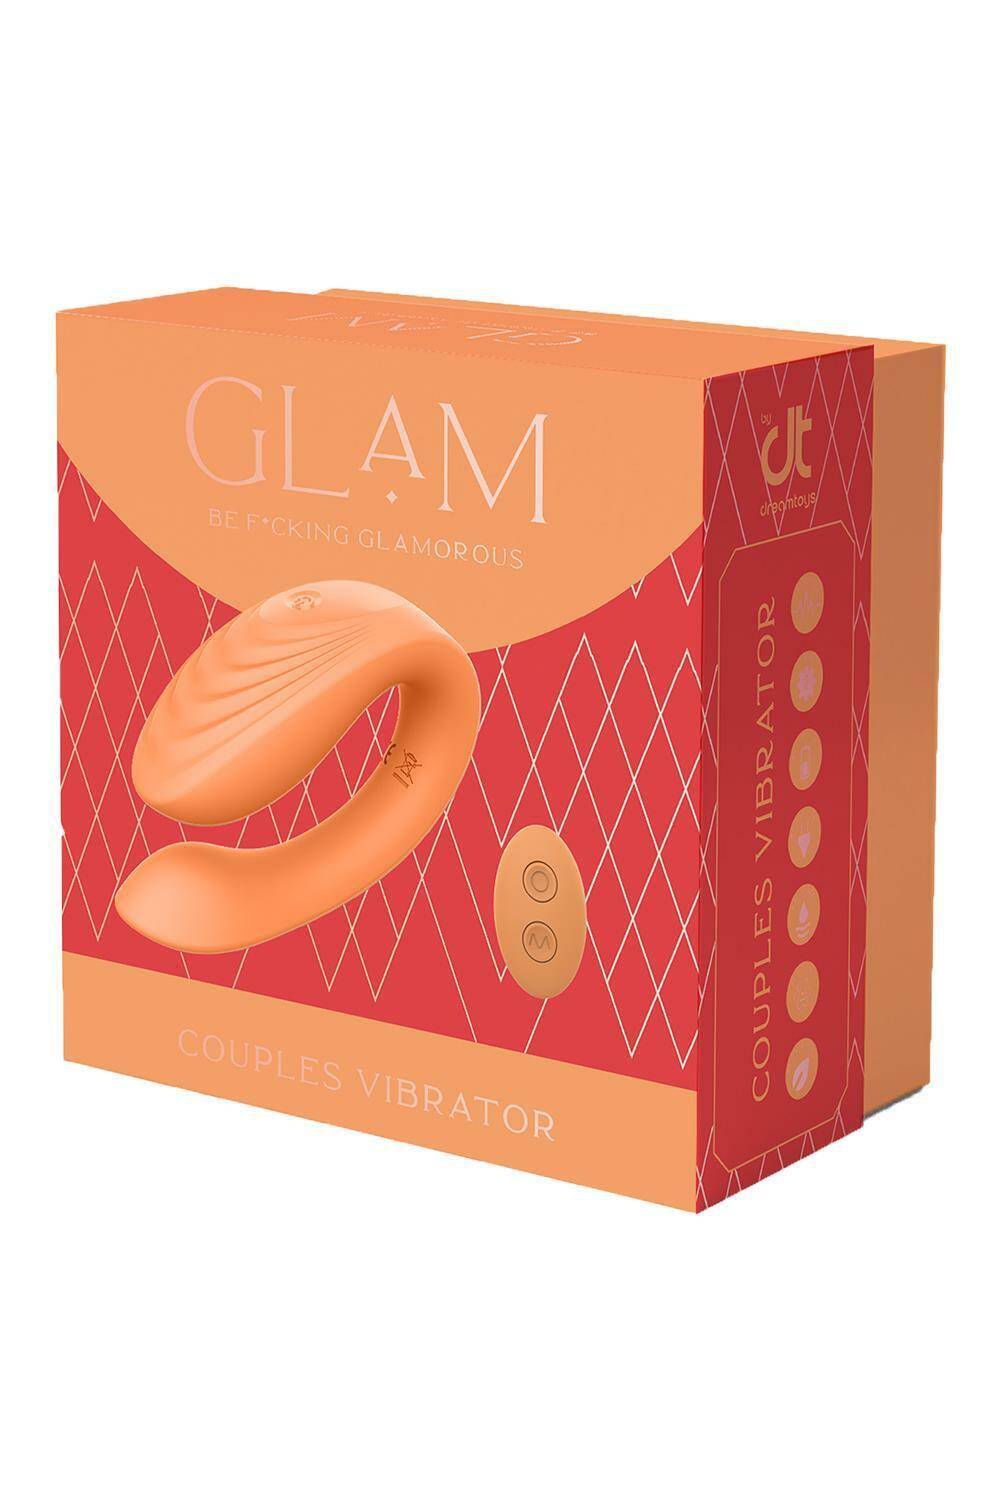 Glam - Couples Vibrator (Zdjęcie 2)